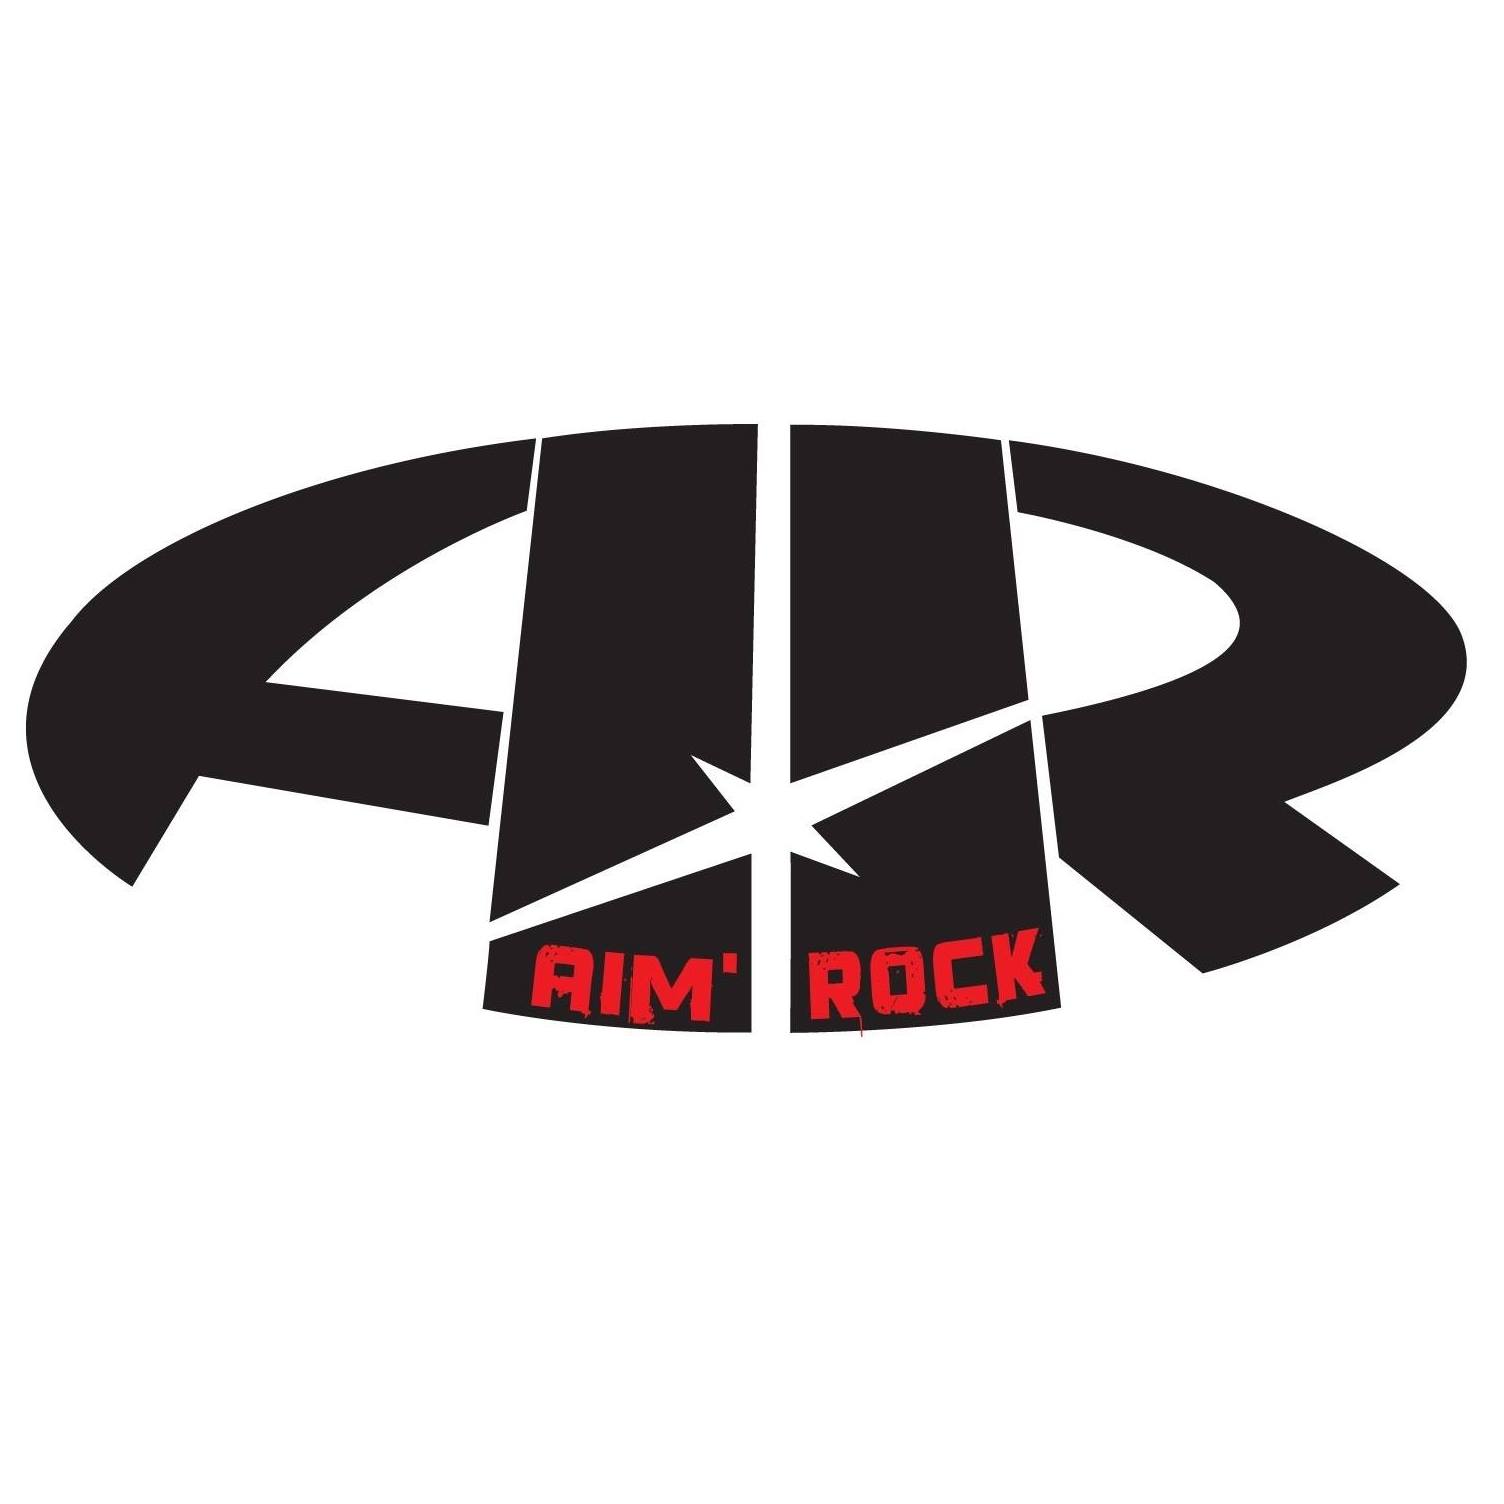 Association Aim'Rock